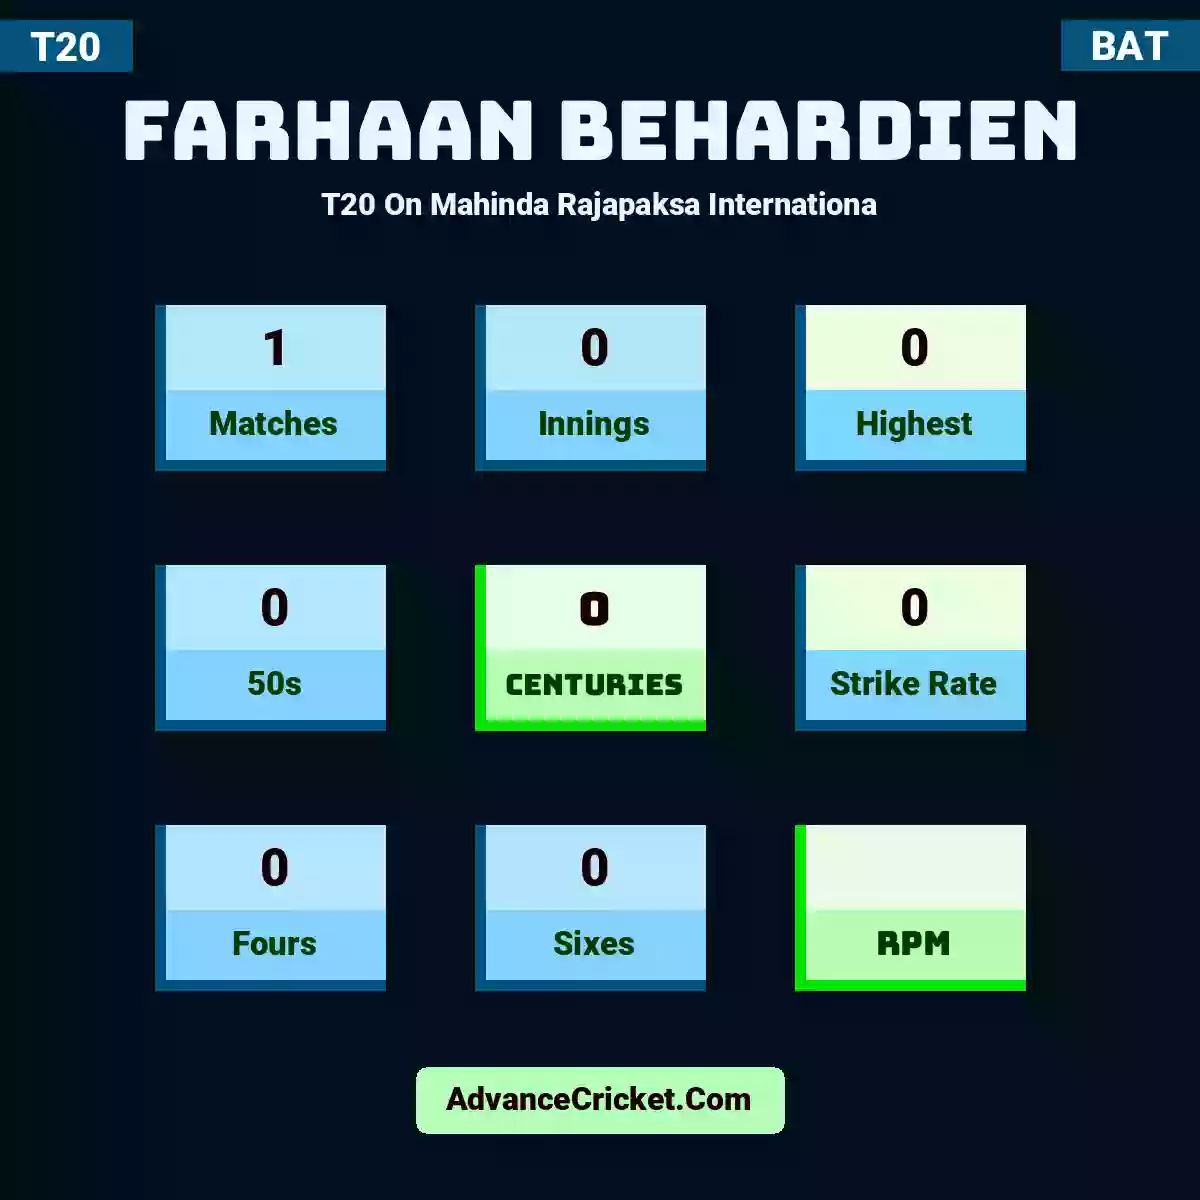 Farhaan Behardien T20  On Mahinda Rajapaksa Internationa, Farhaan Behardien played 1 matches, scored 0 runs as highest, 0 half-centuries, and 0 centuries, with a strike rate of 0. F.Behardien hit 0 fours and 0 sixes.